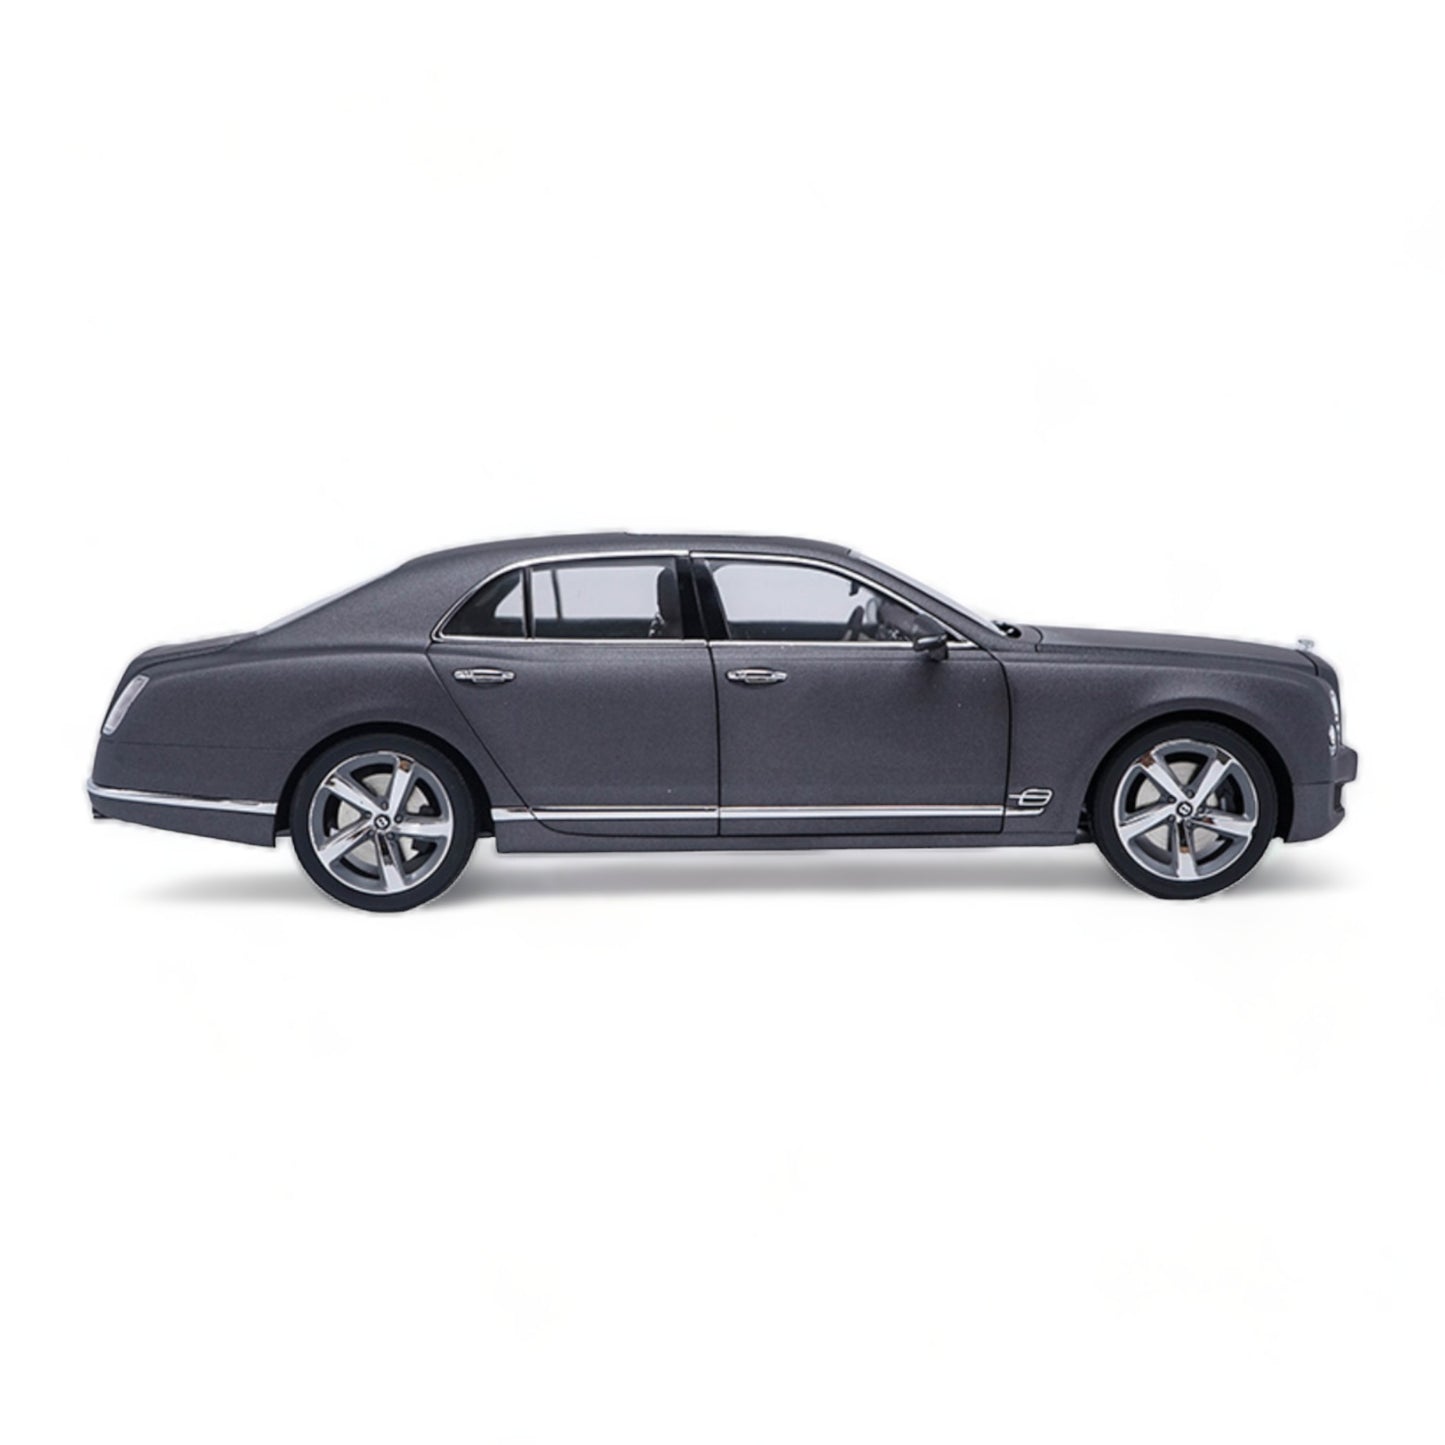 1/18 Diecast Bentley Mulsanne Speed Grey Kyosho Scale Model Car